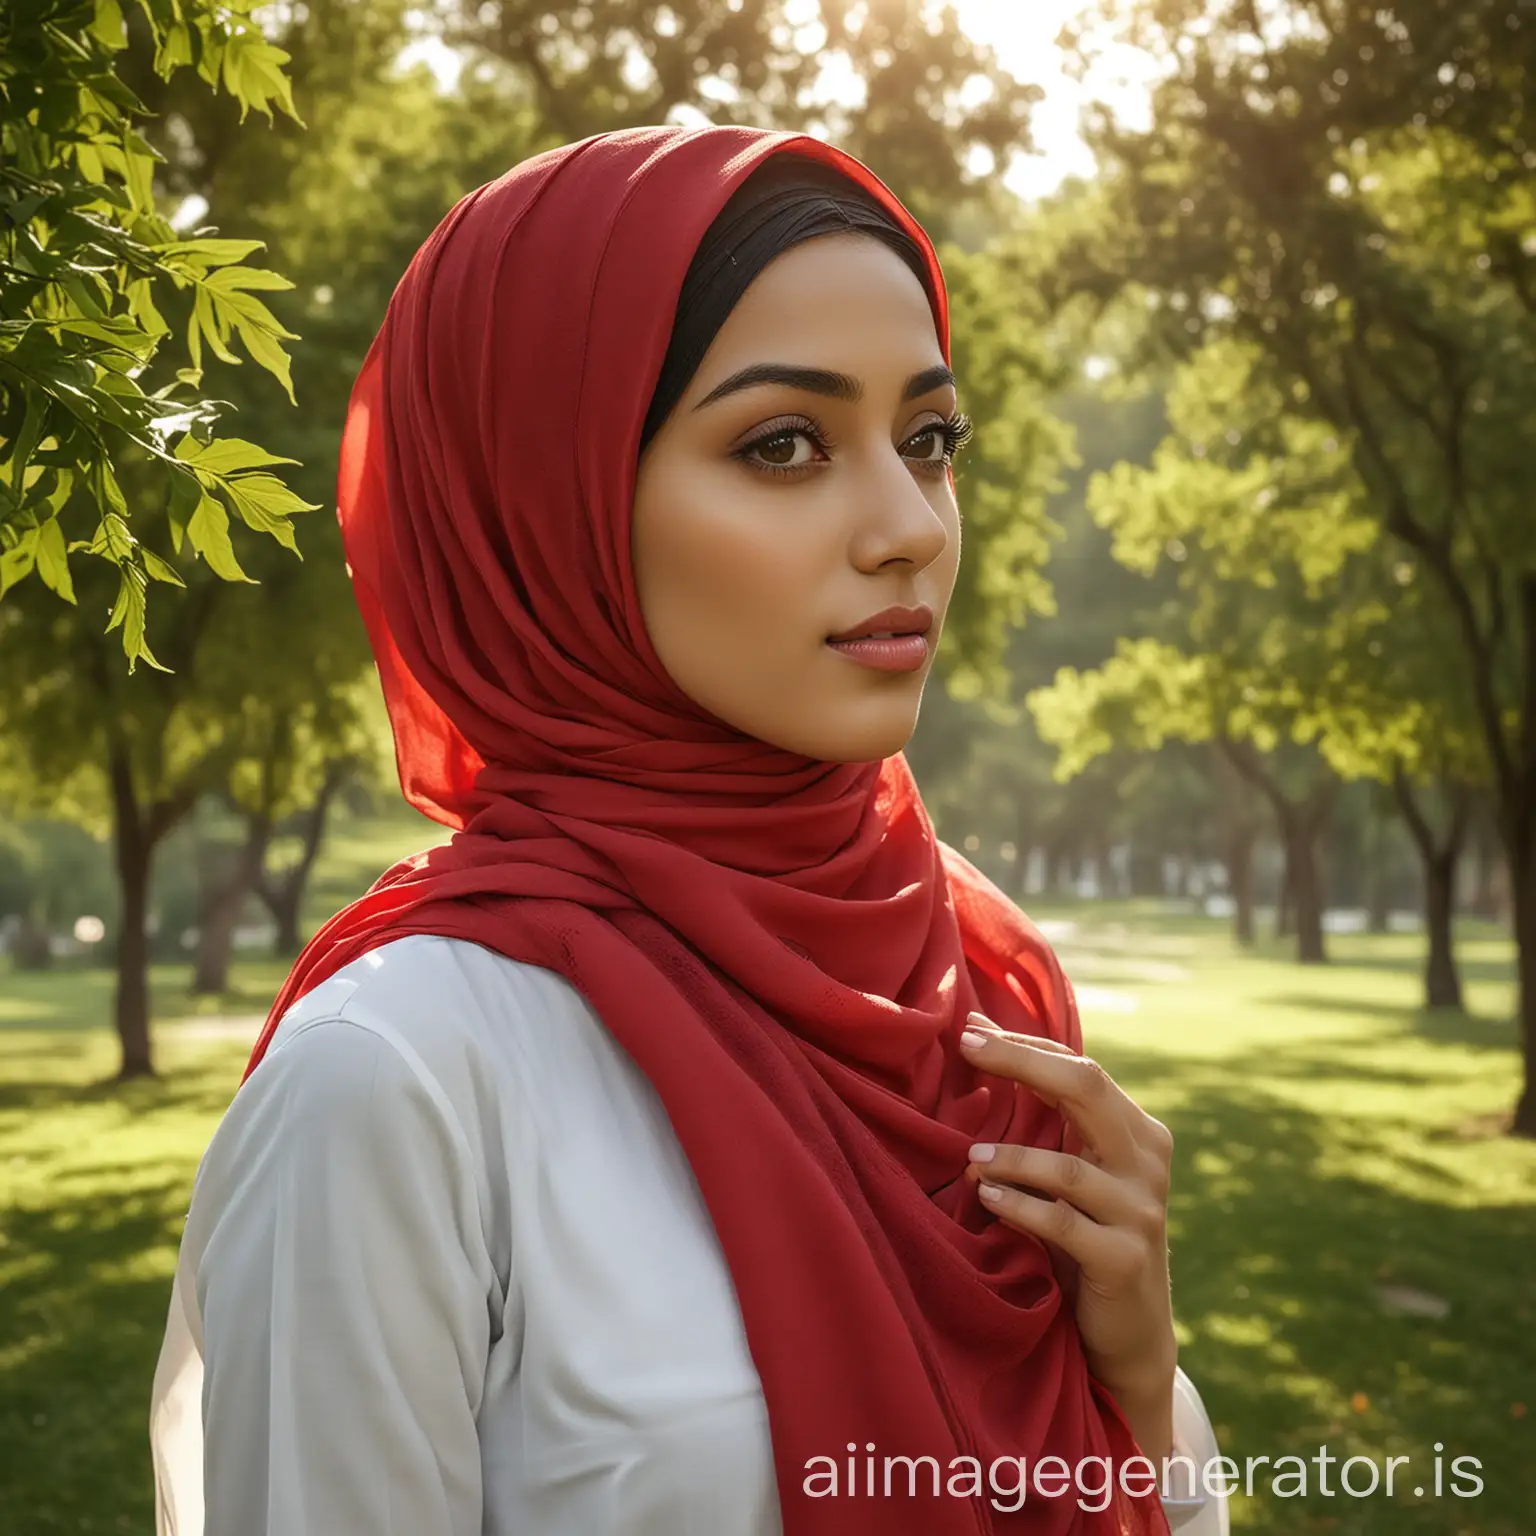 Pakistani-Model-in-Red-Georgette-Chiffon-Hijab-in-Lush-Park-Setting